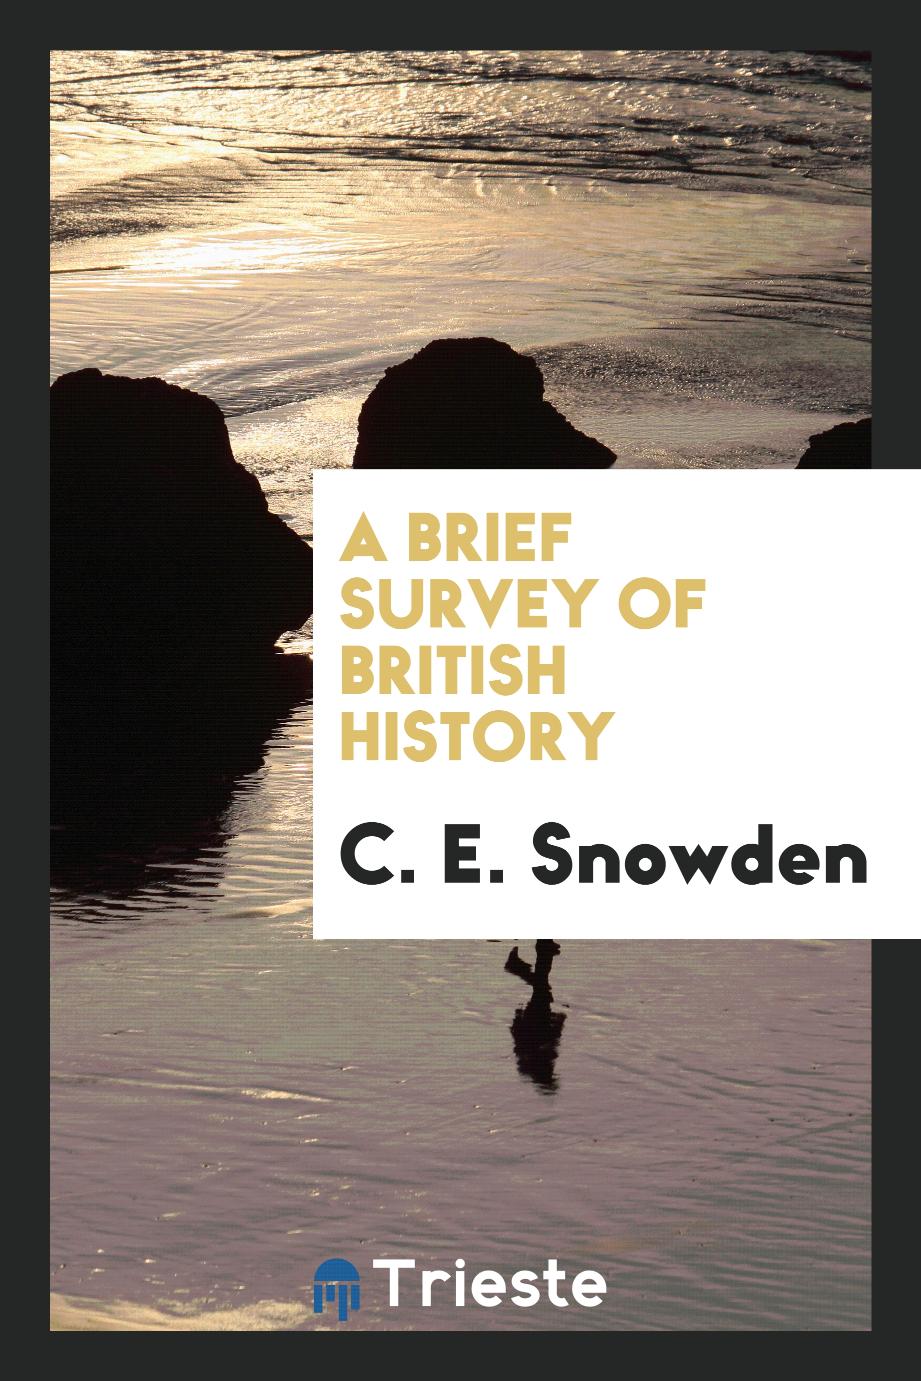 A Brief Survey of British History